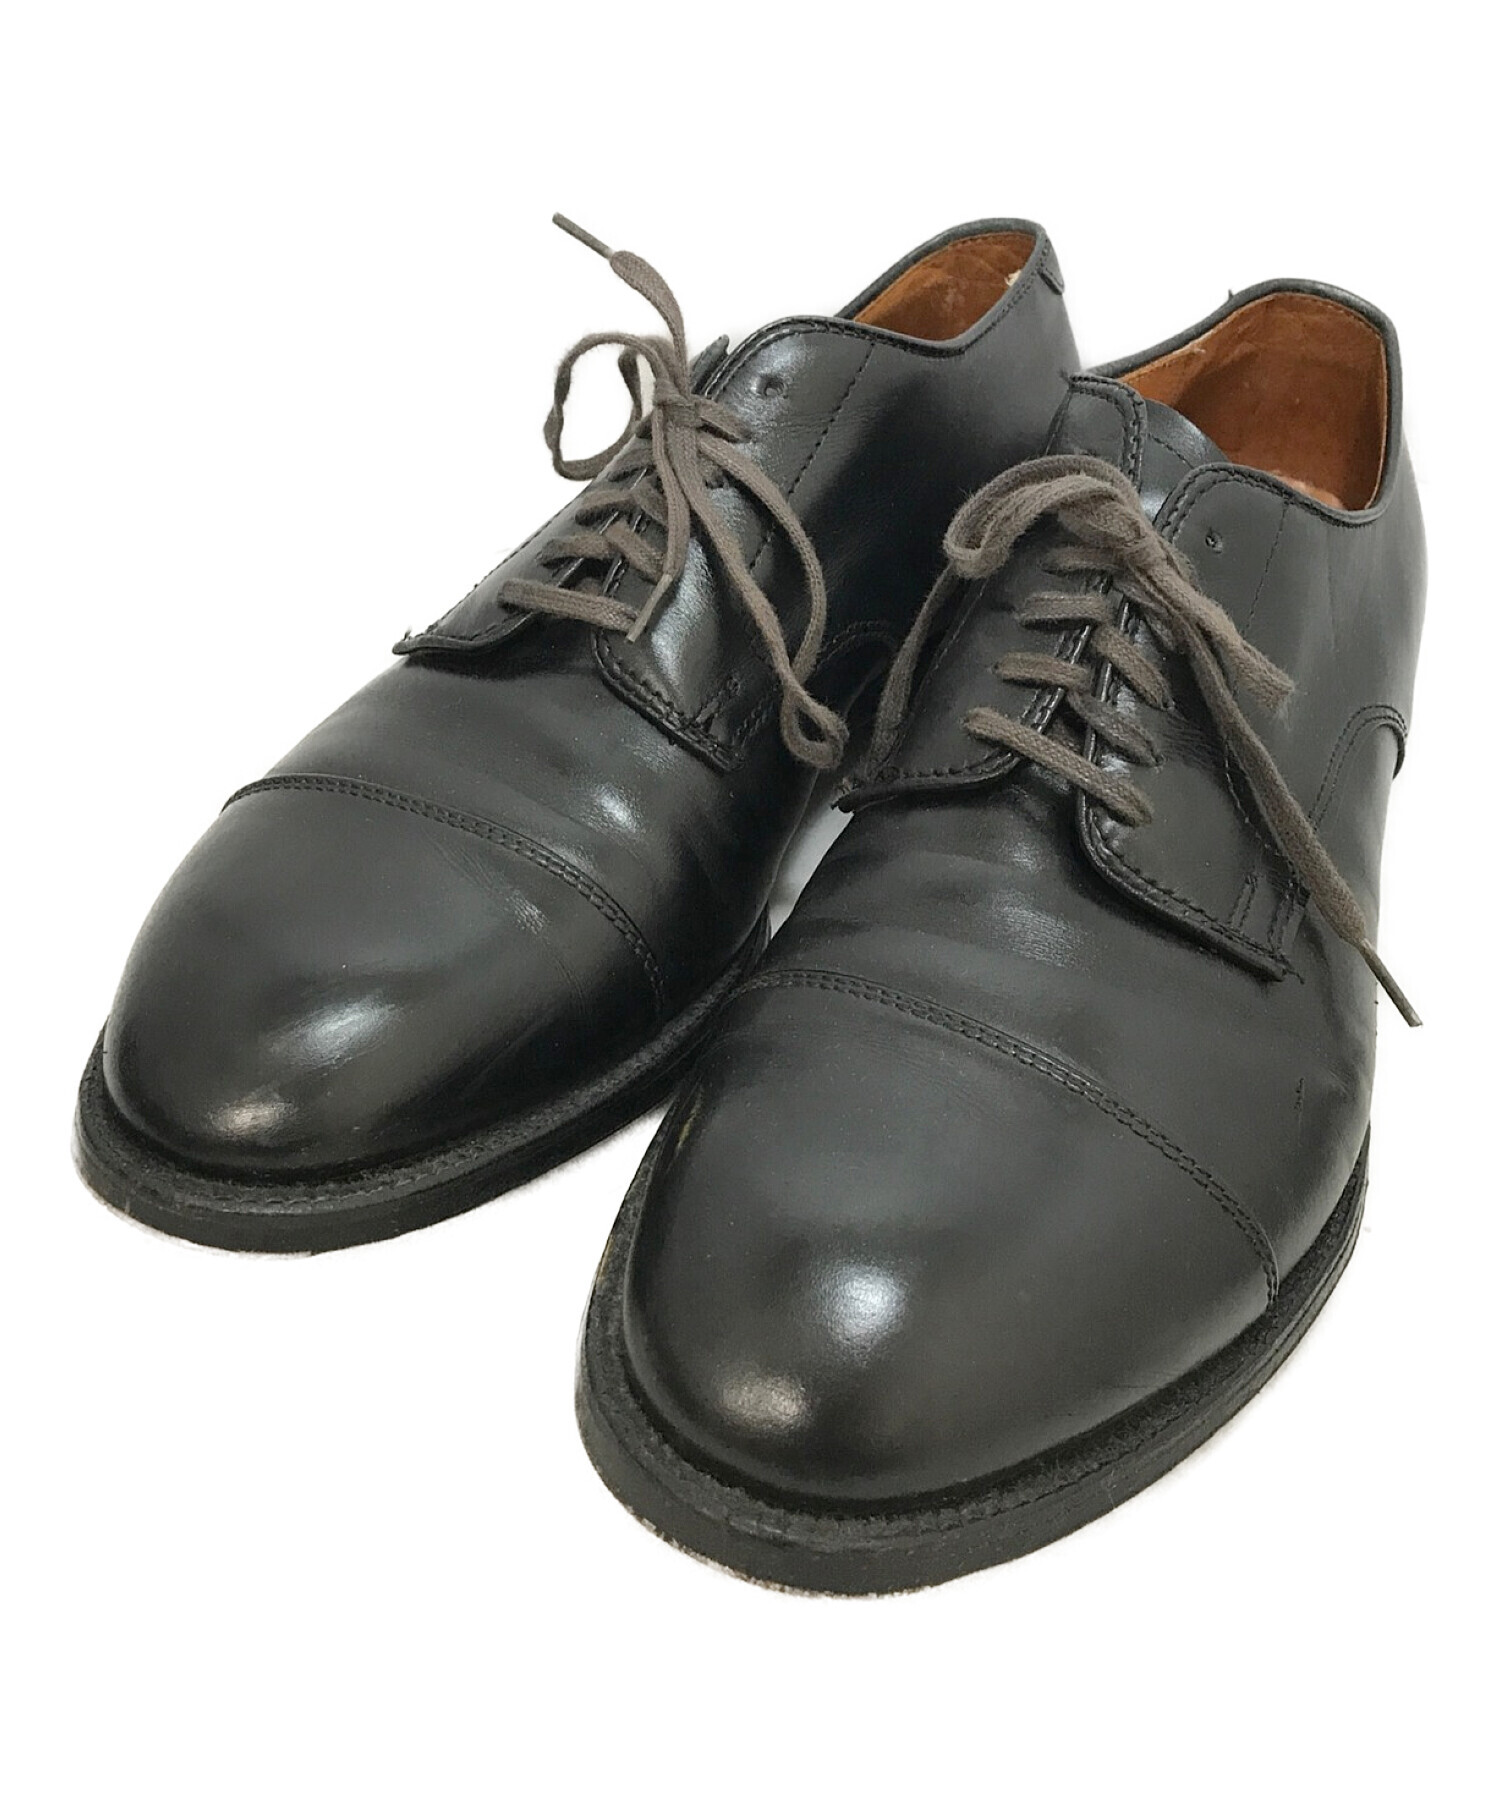 Alden Tricker's 高級靴6足まとめ売り 26.5cm